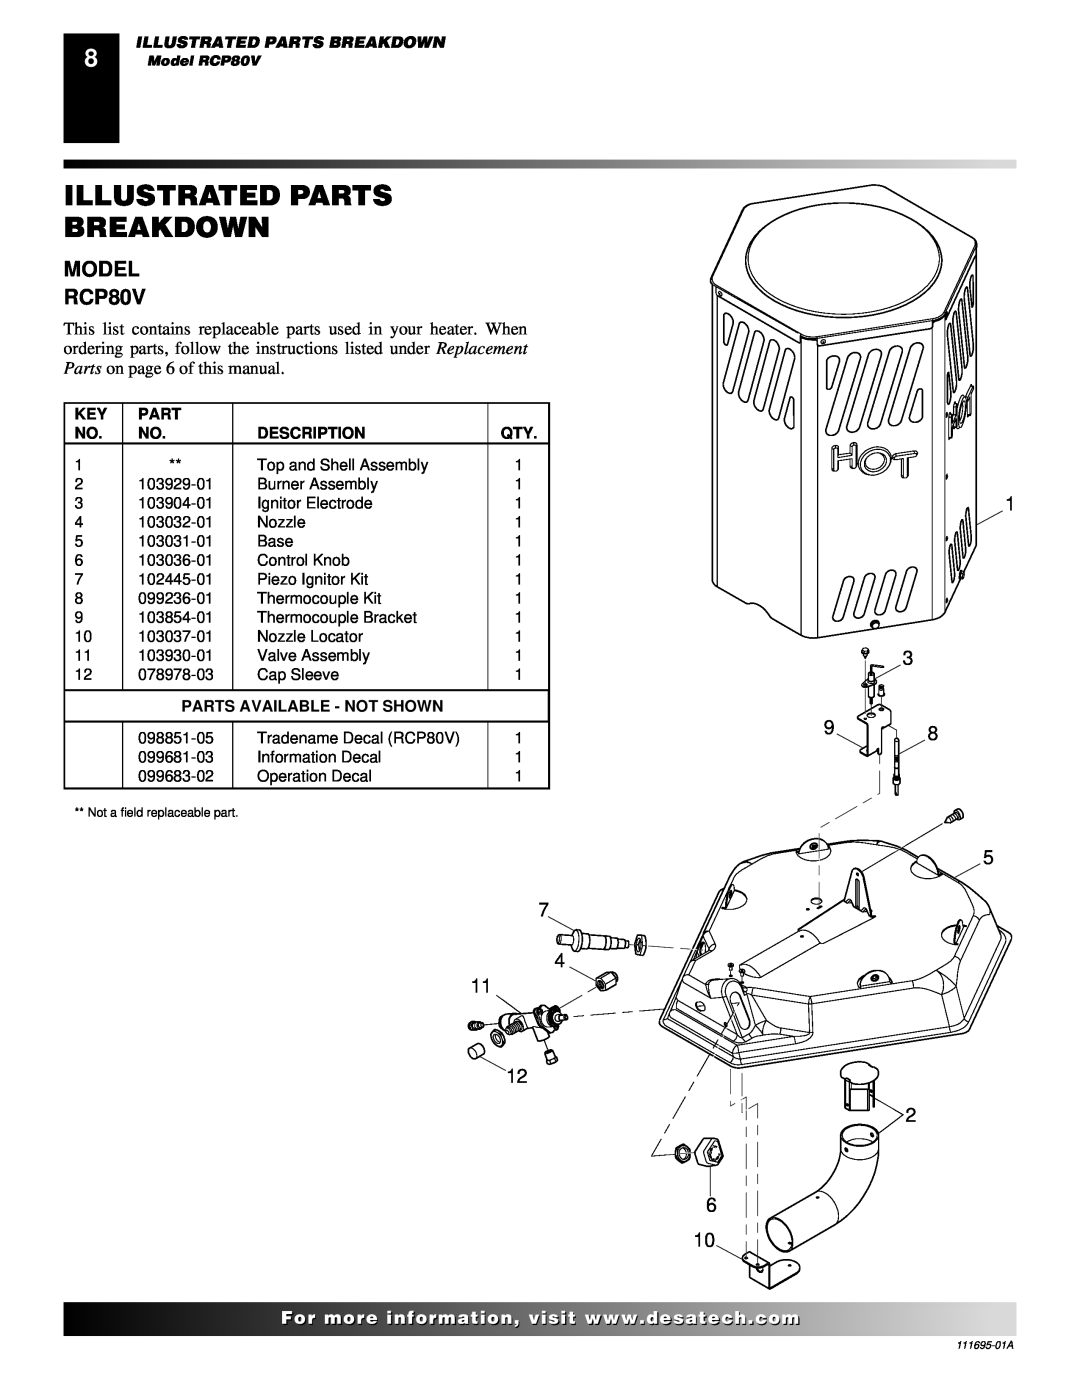 Desa 000 Btu/hr Models owner manual Illustrated Parts Breakdown, Description, Parts Available - Not Shown 